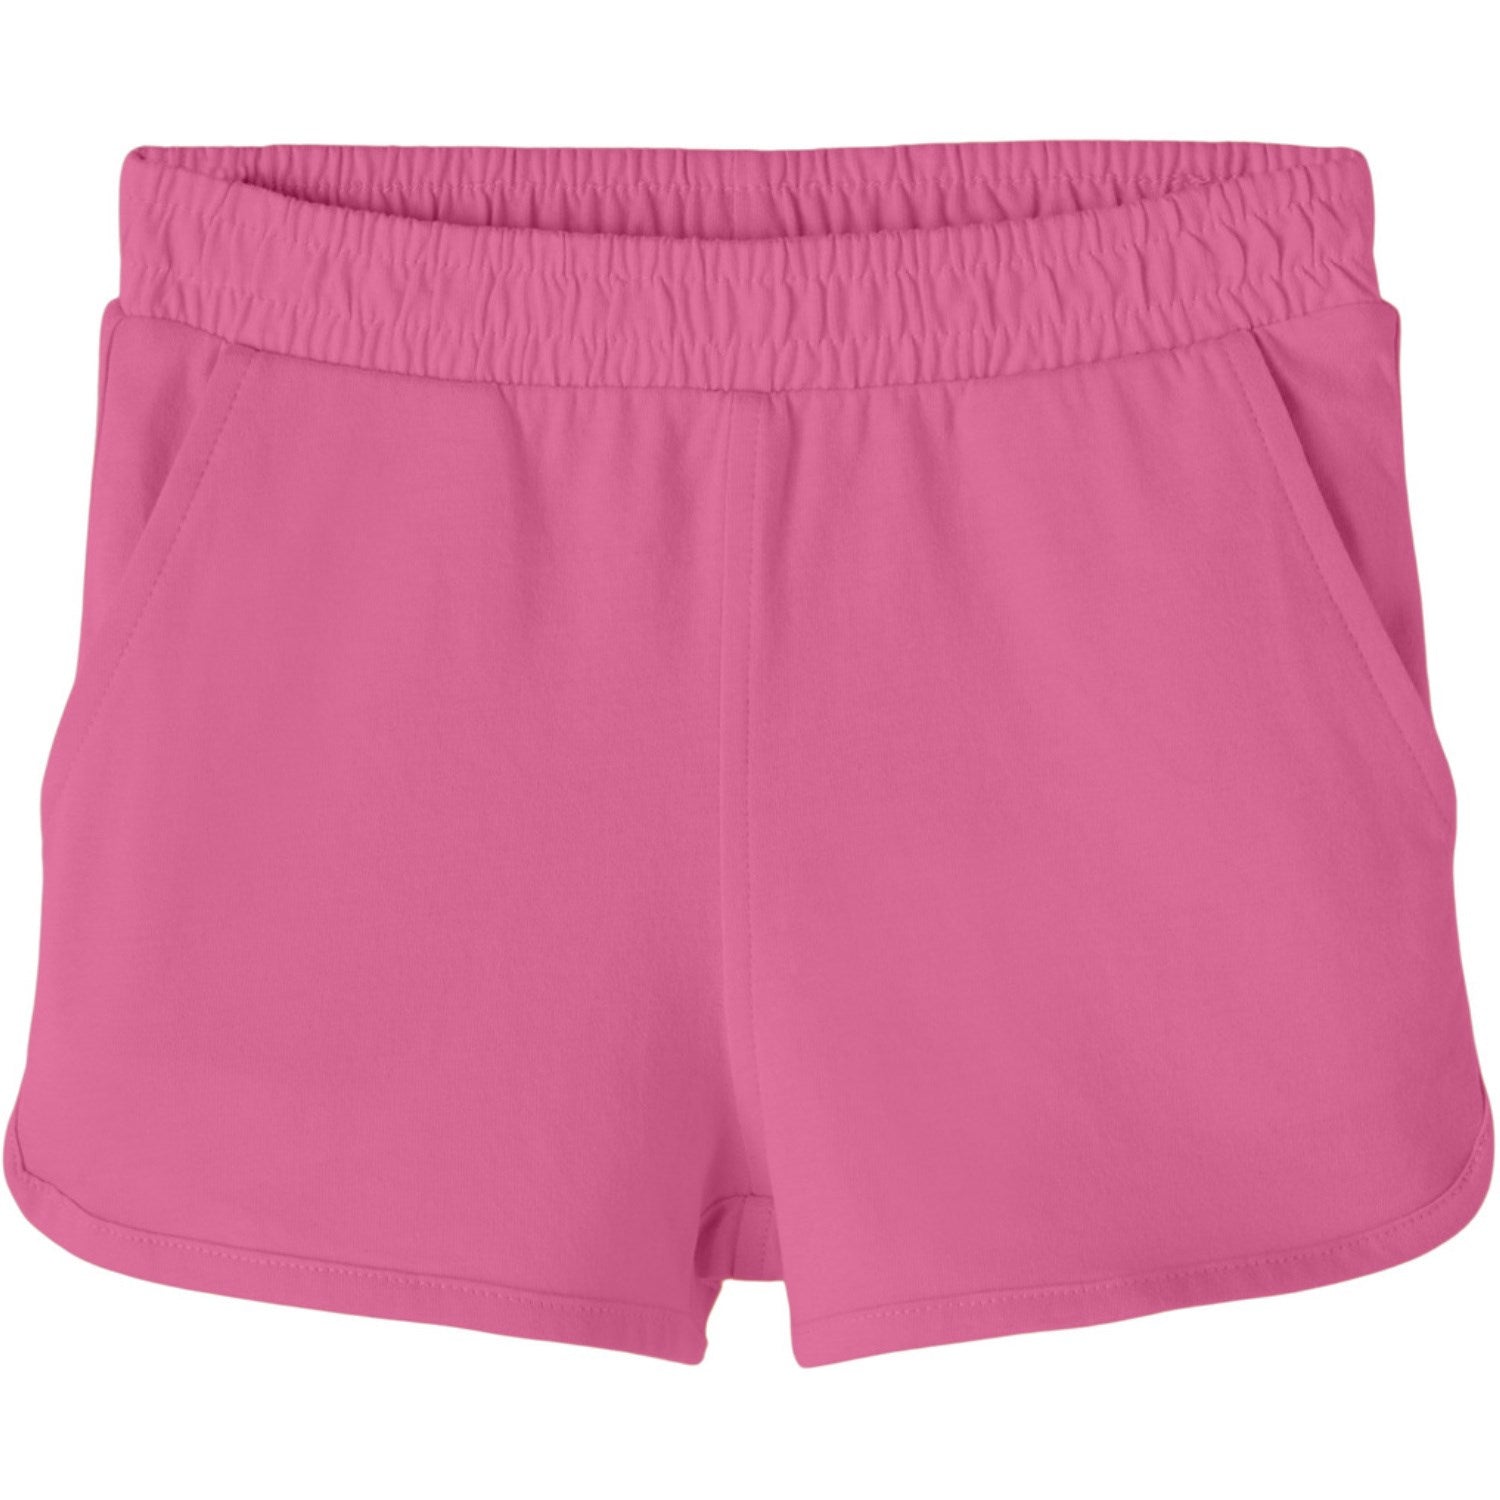 Name It Pink Power Valinka Shorts